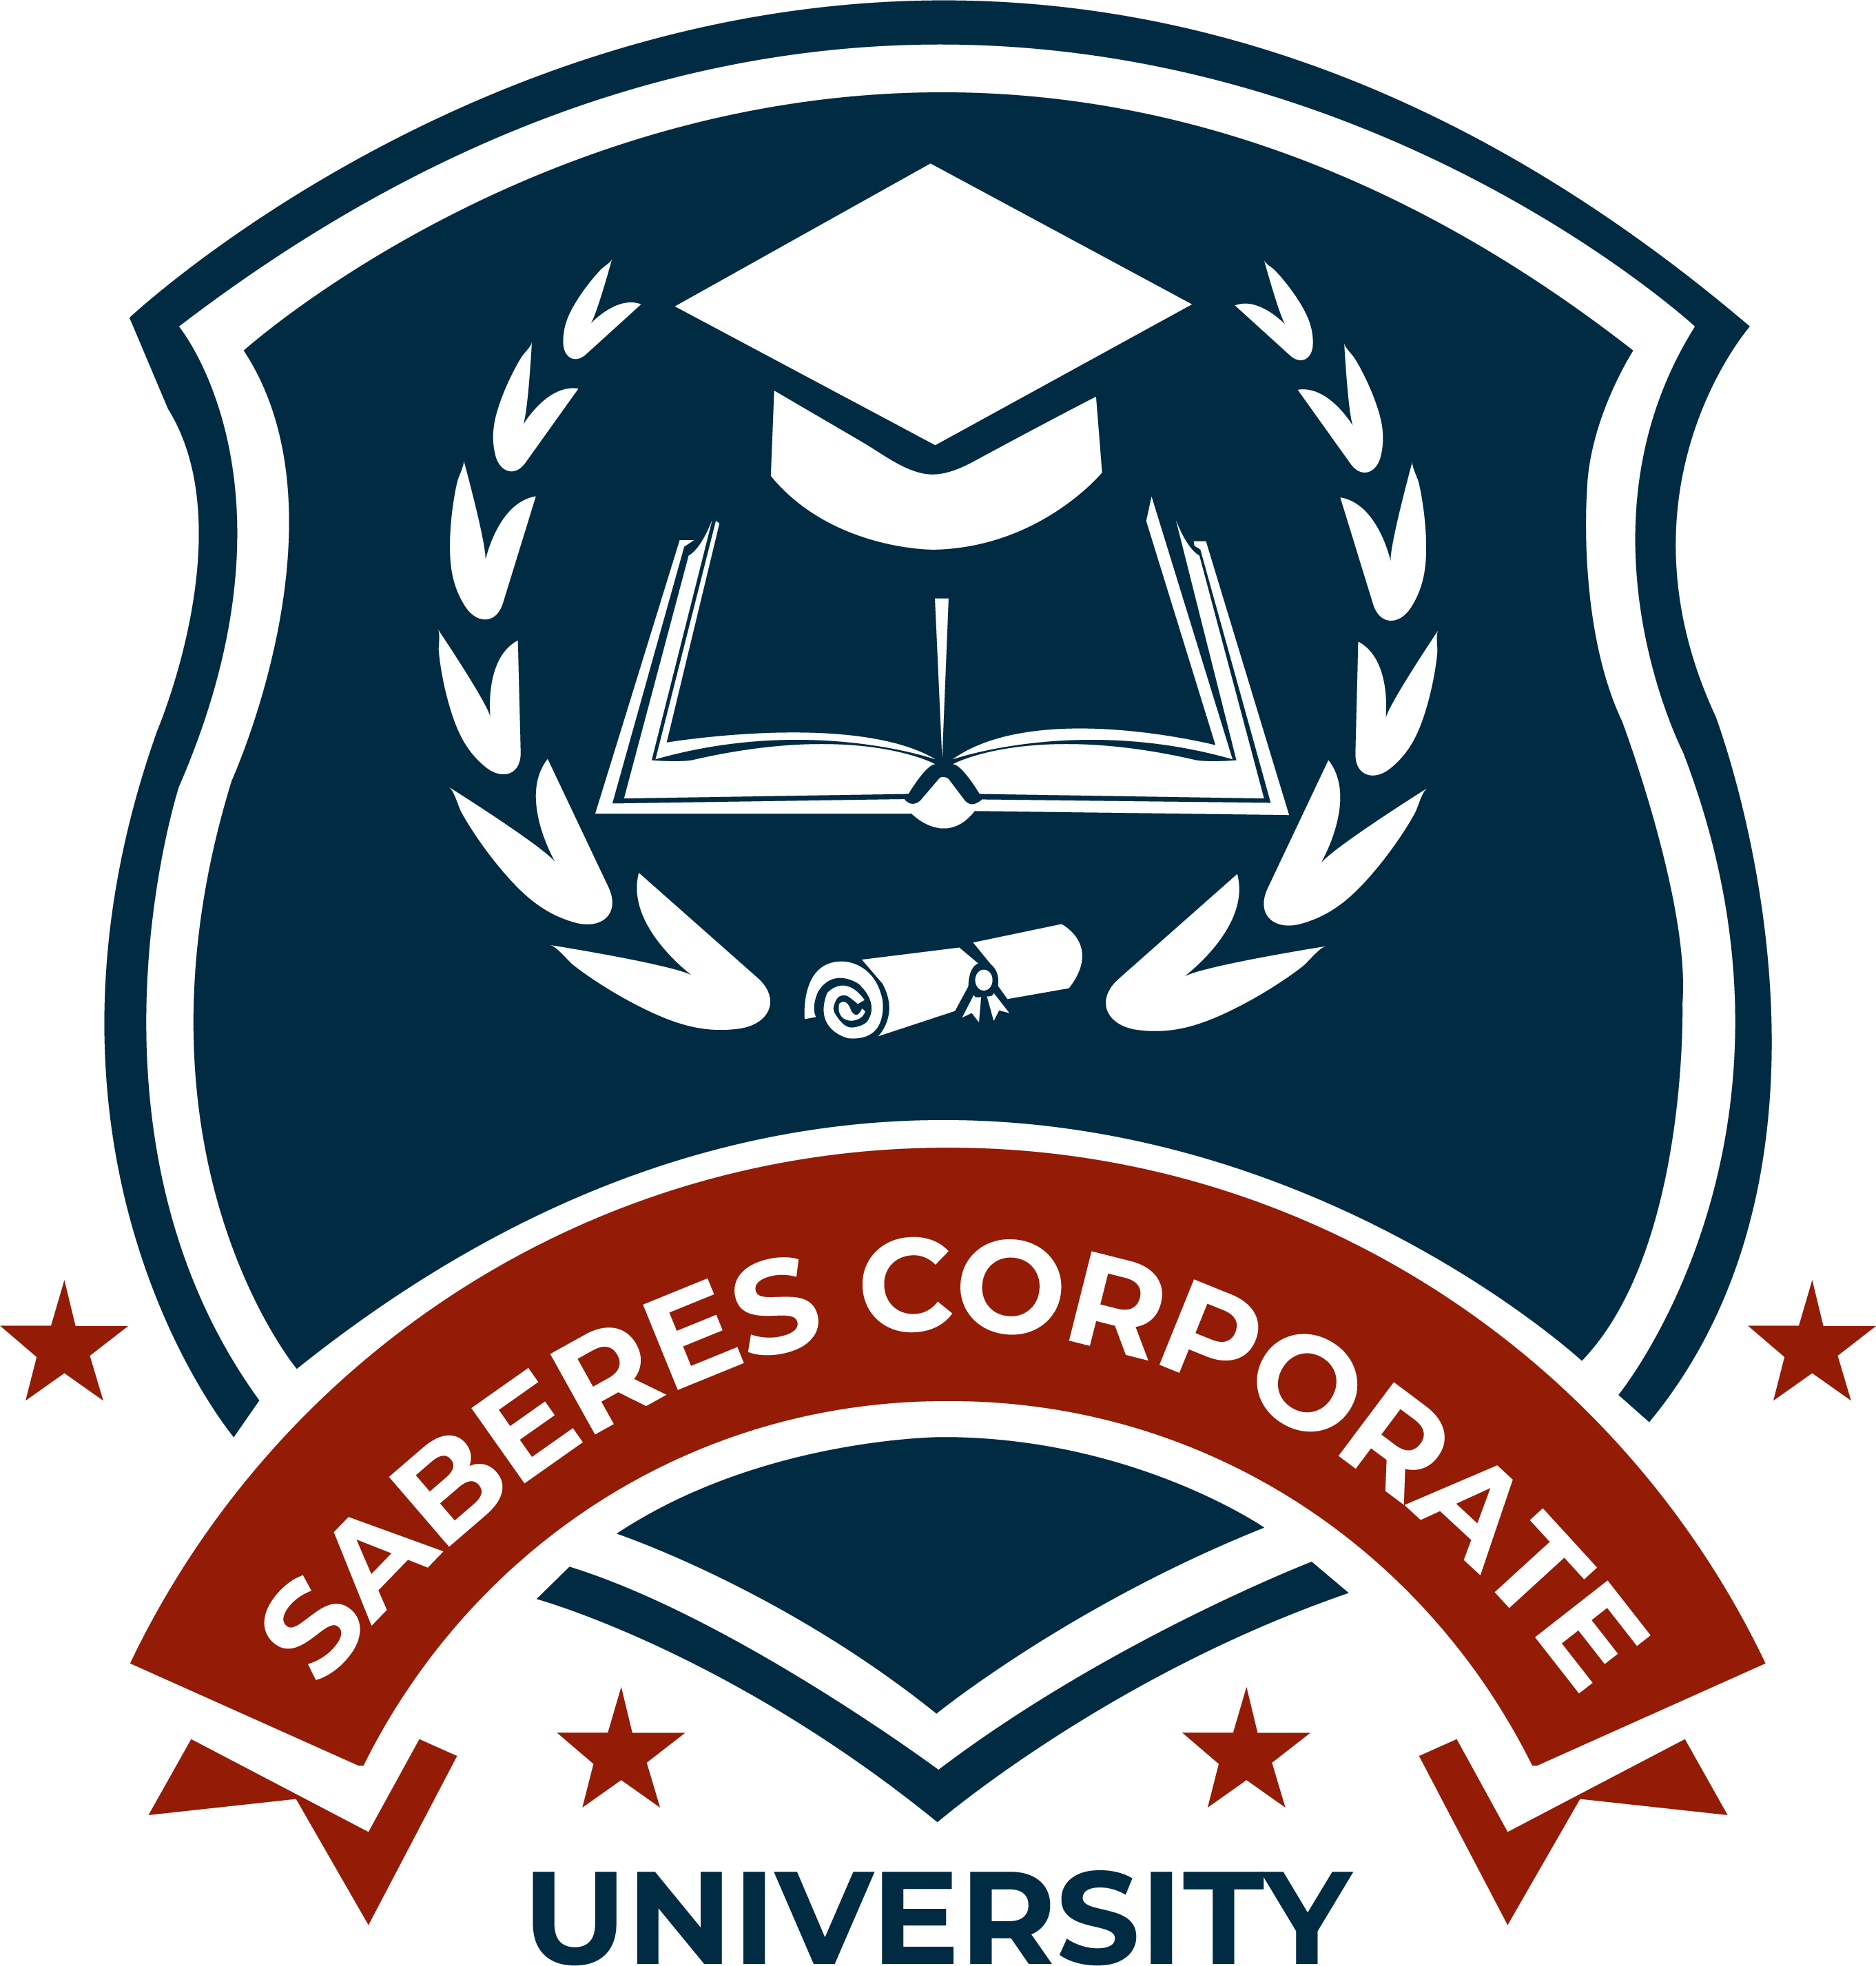 Saberes Corporate University